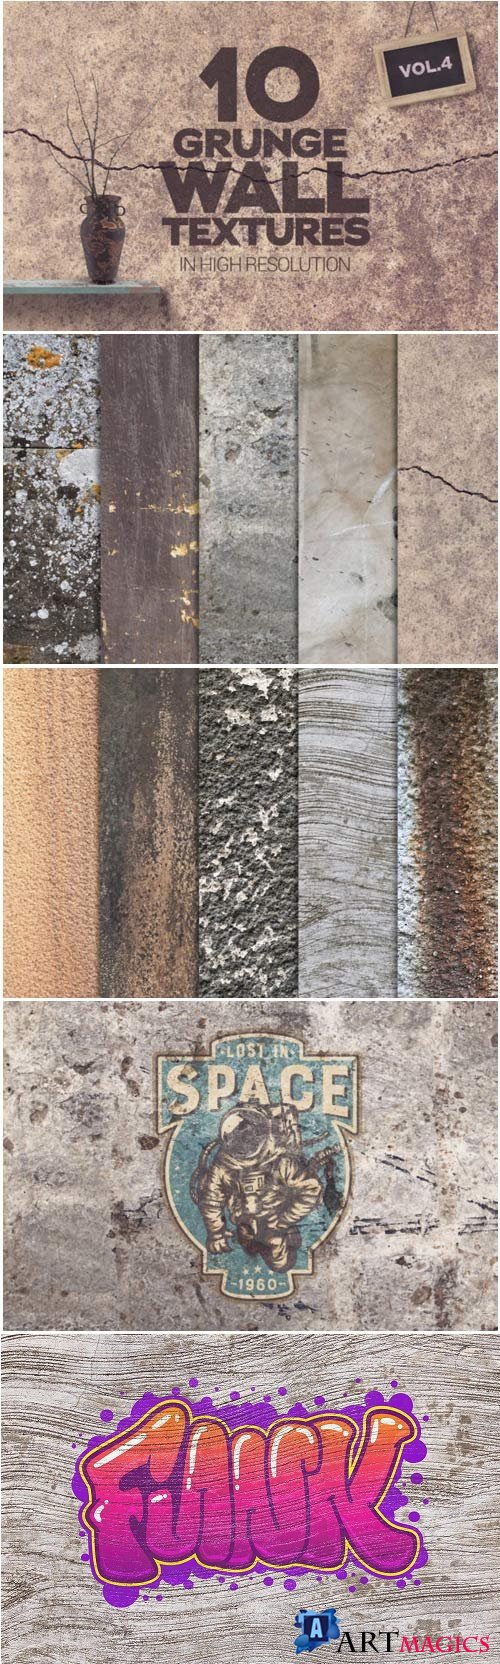 Grunge Wall Textures Vol 4 x10 3976494